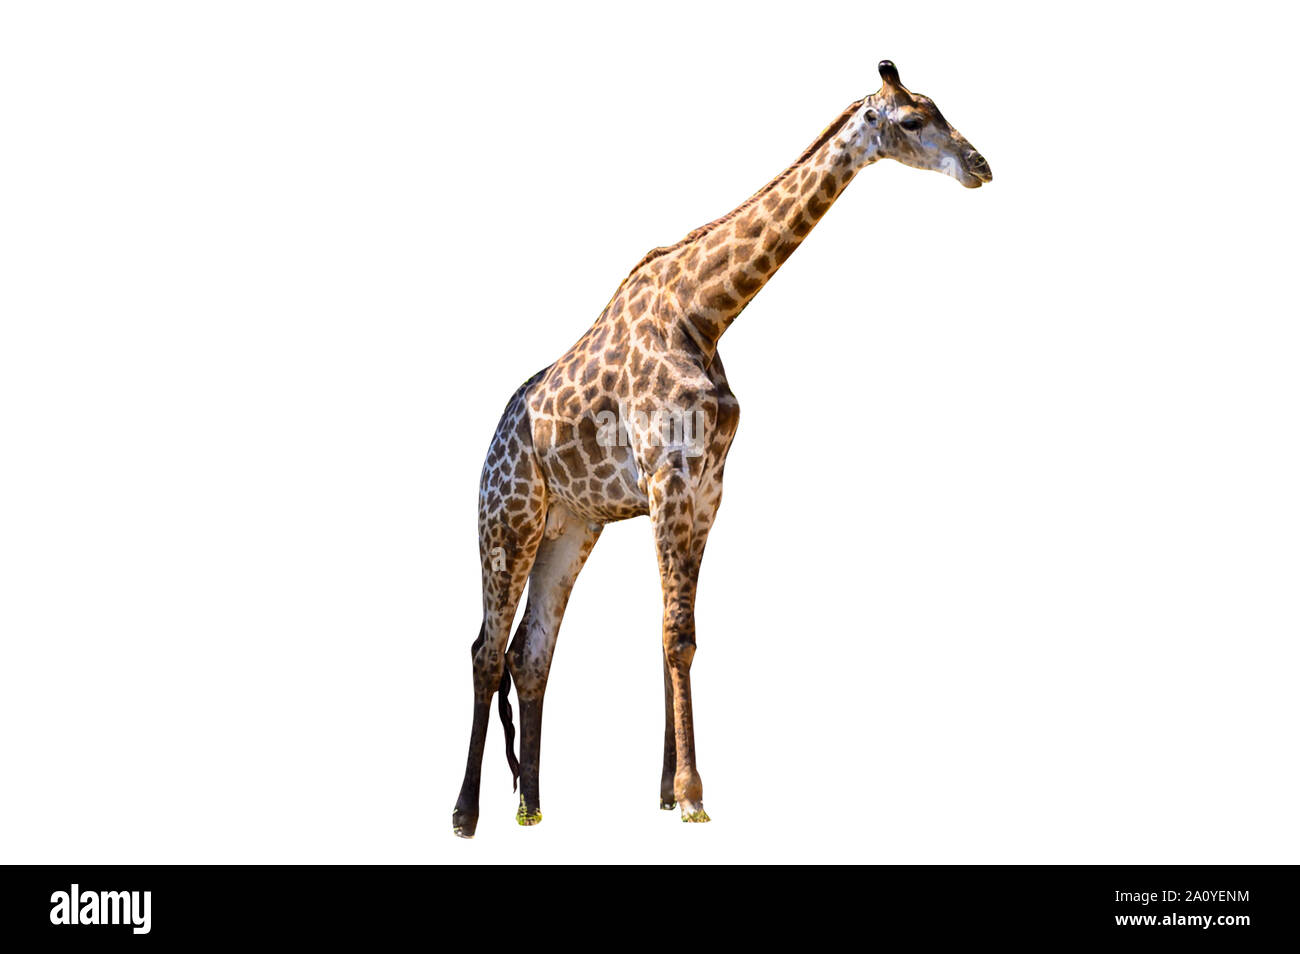 Girafe Grand Fond blanc isoler Banque D'Images